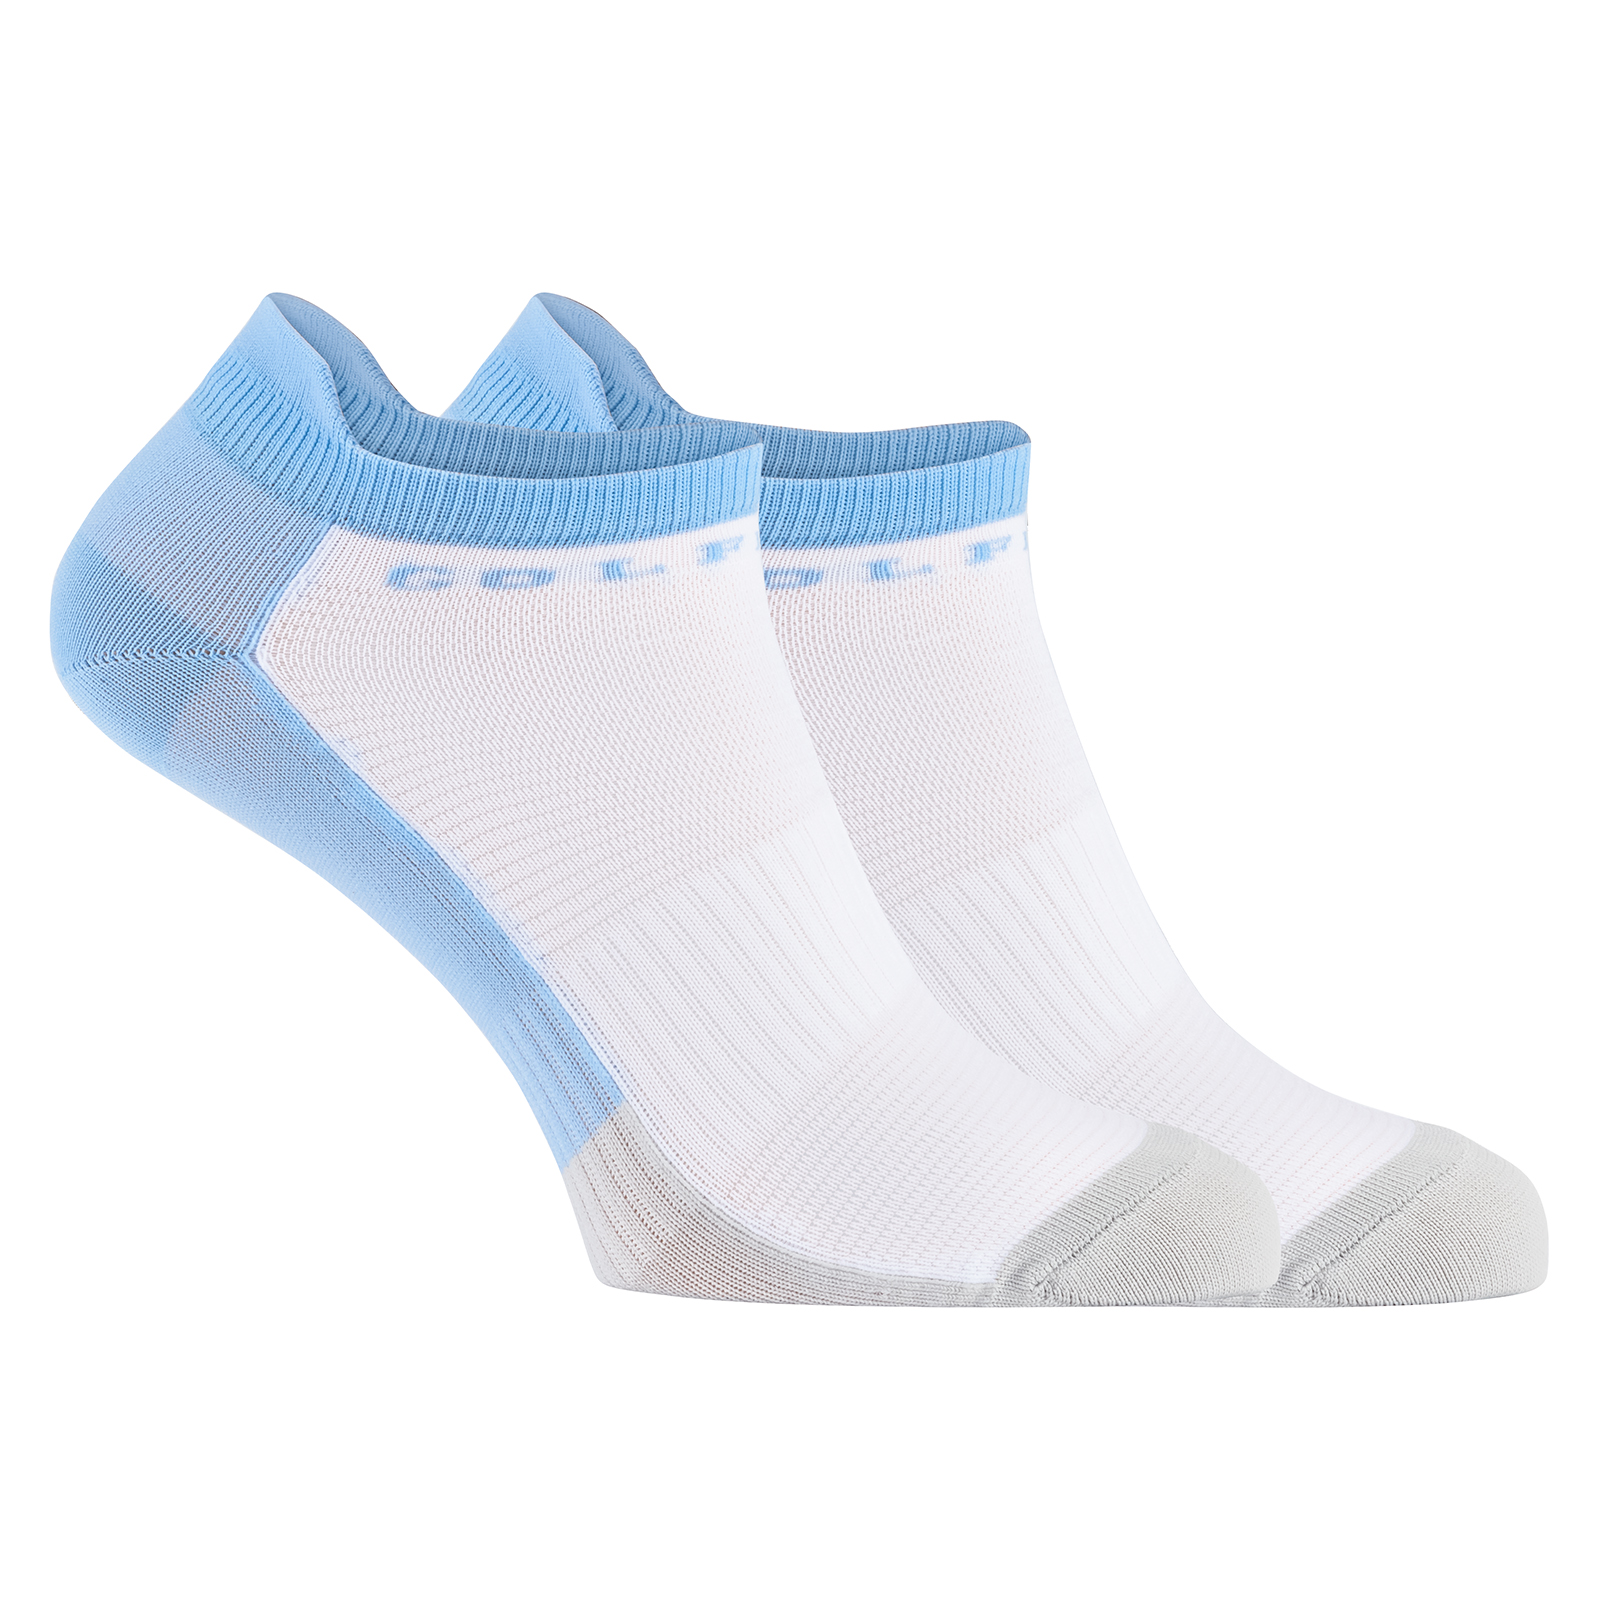 Ladies' dry comfort golf socks